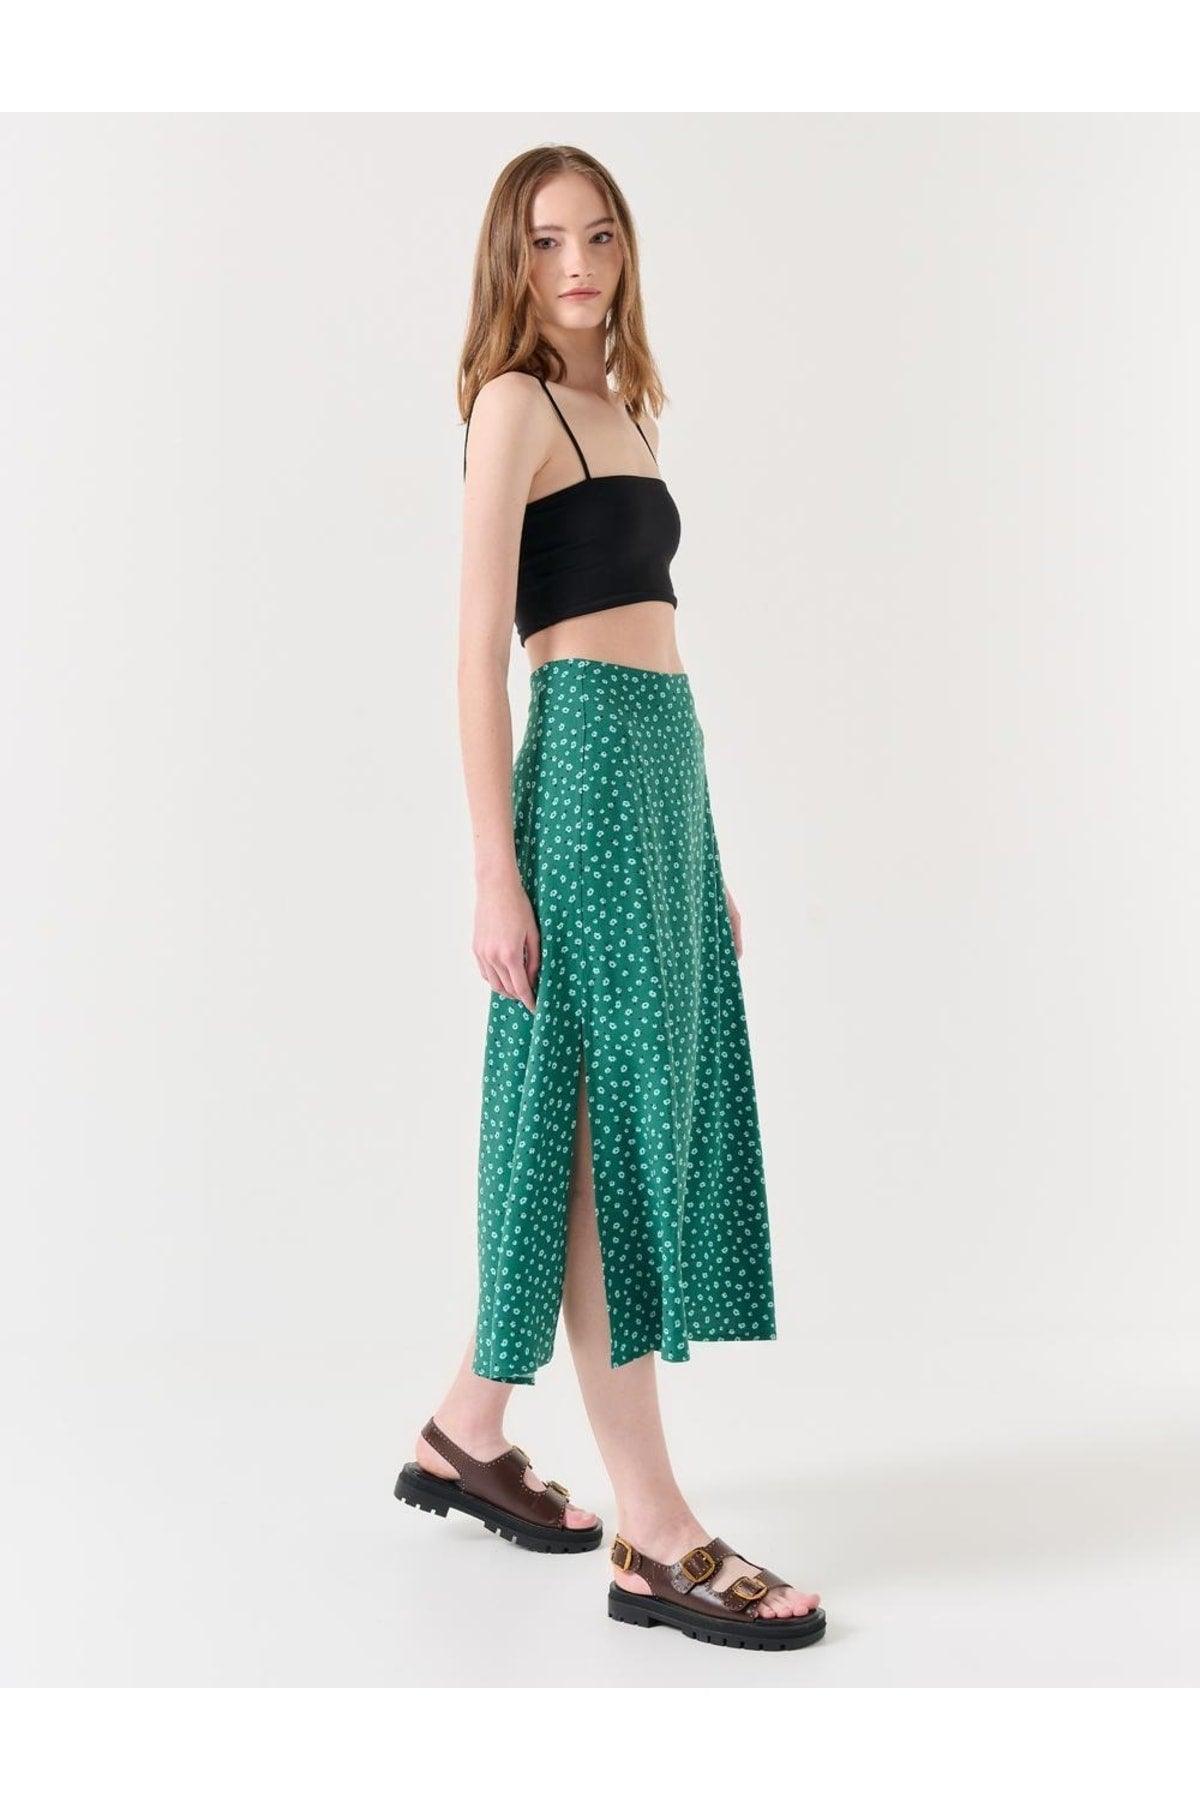 Emerald Green High Waist Floral Midi Skirt - Swordslife